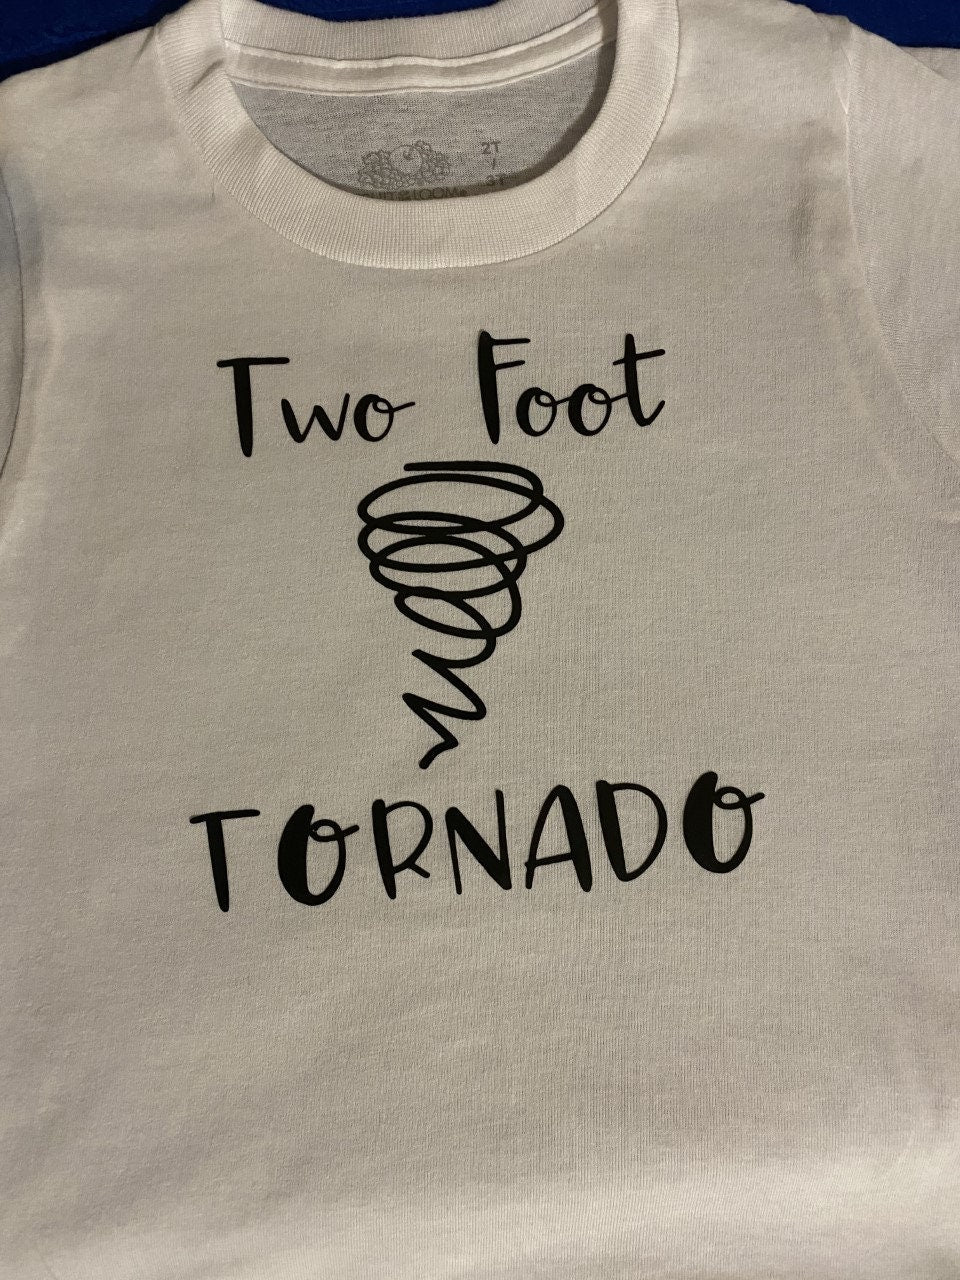 Two Foot Tornado / funny toddler shirt / funny kids shirt / funny shirt / funny tornado / kids shirt / toddler shirt / funny kids shirt